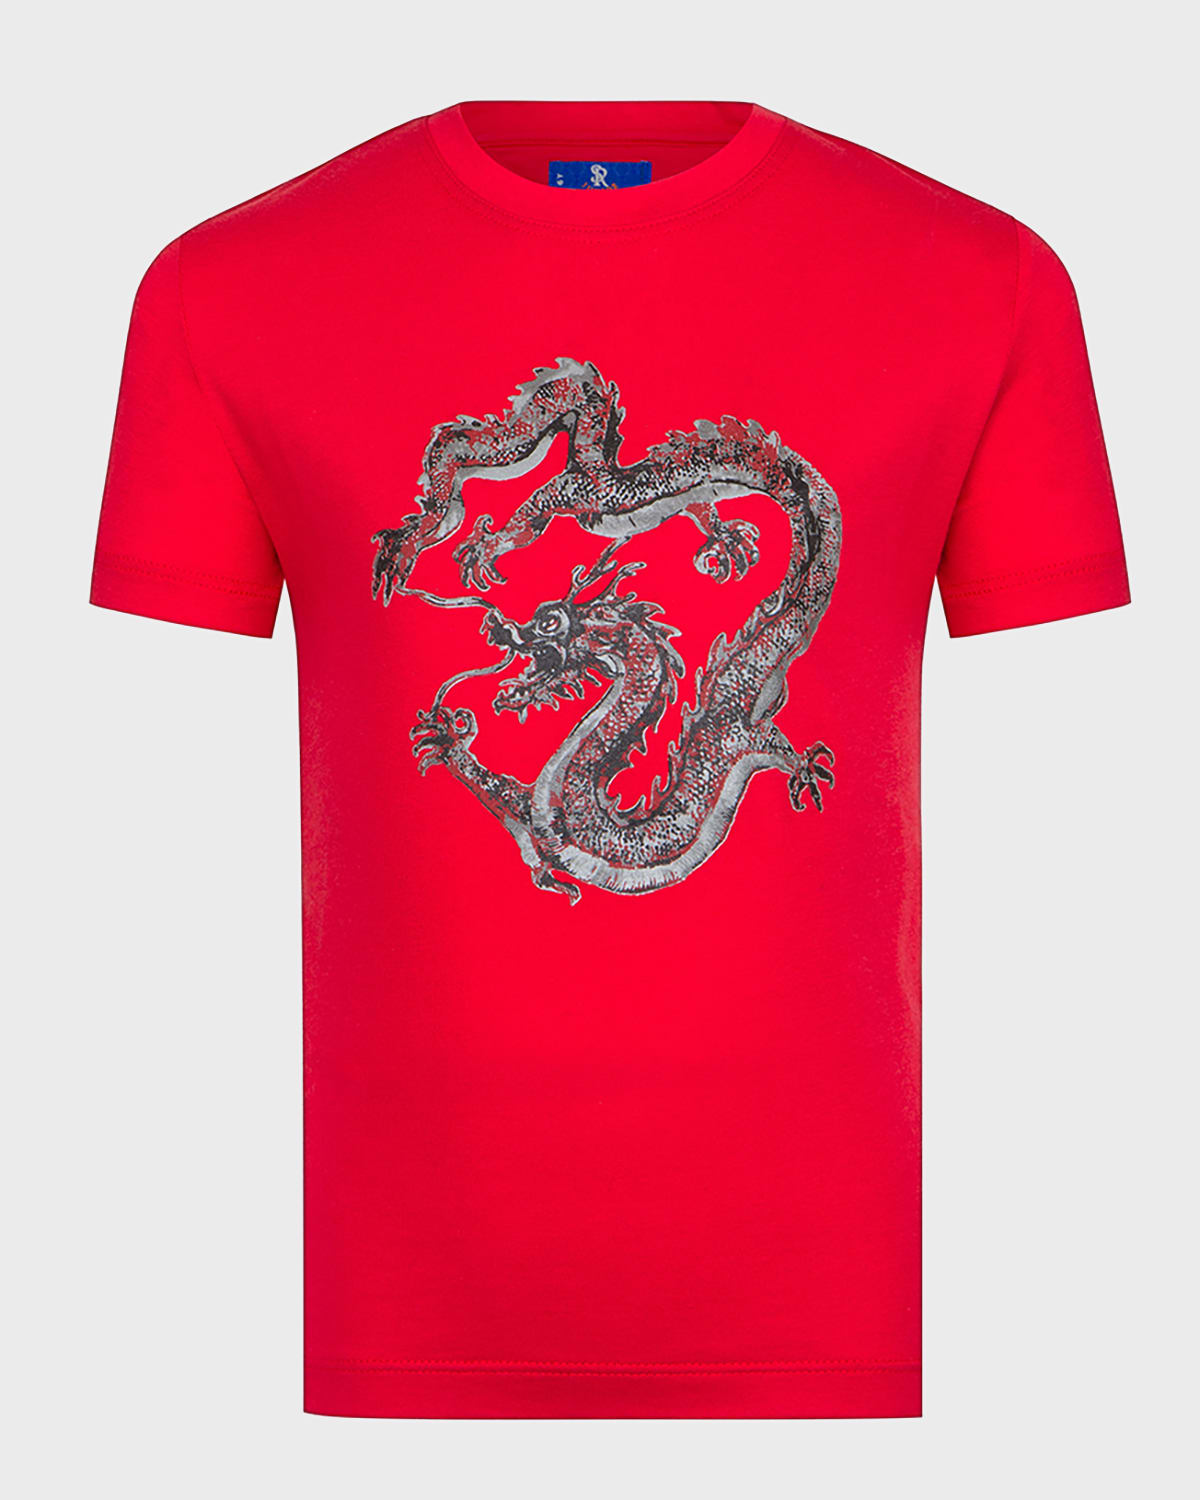 Boy's Dragon Printed Short-Sleeve T-Shirt, Size 4-14